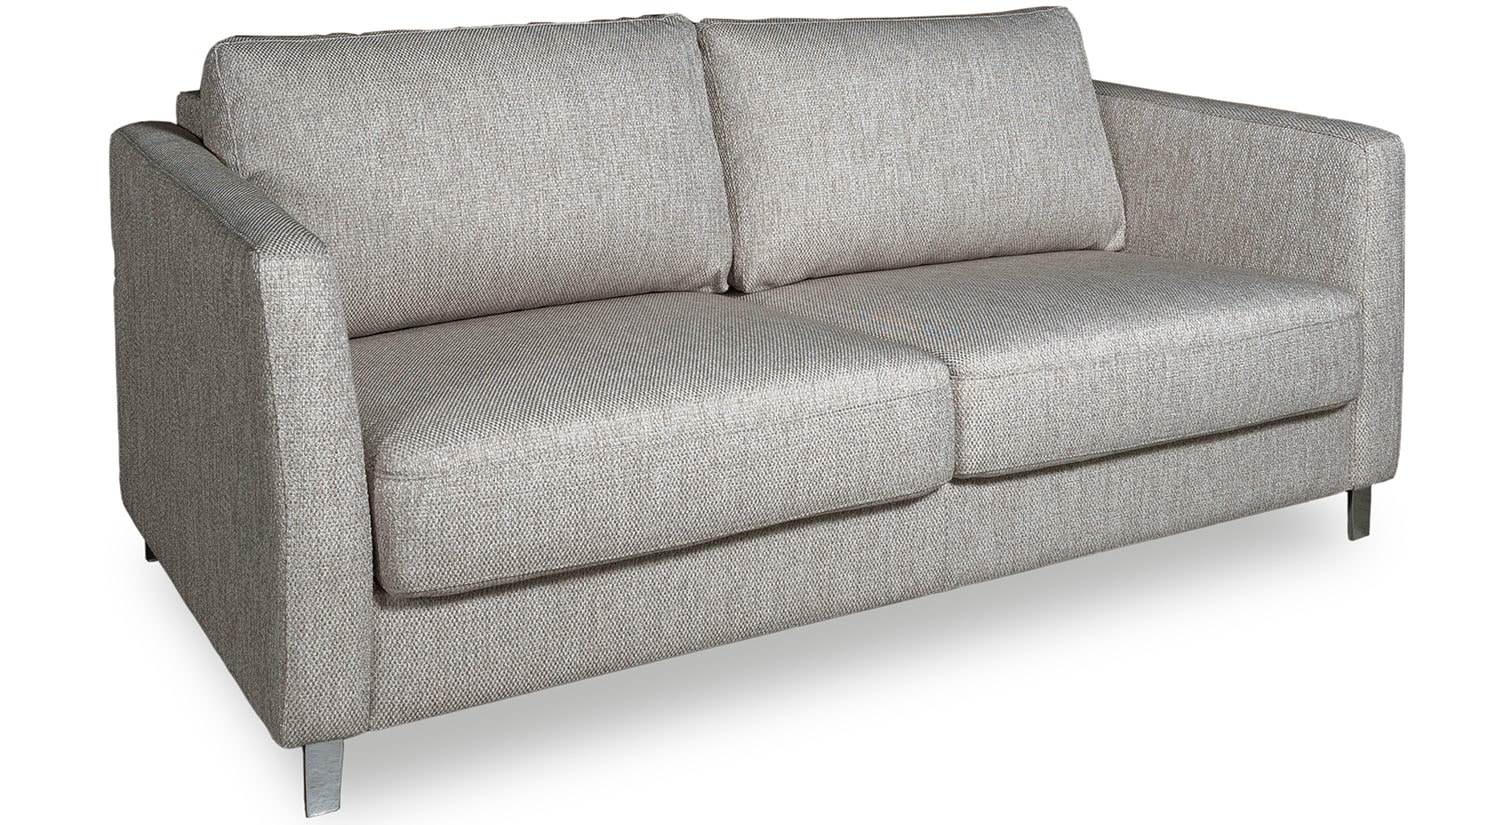 American Leather Comfort Sleeper, American Sleeper Sofa Reviews